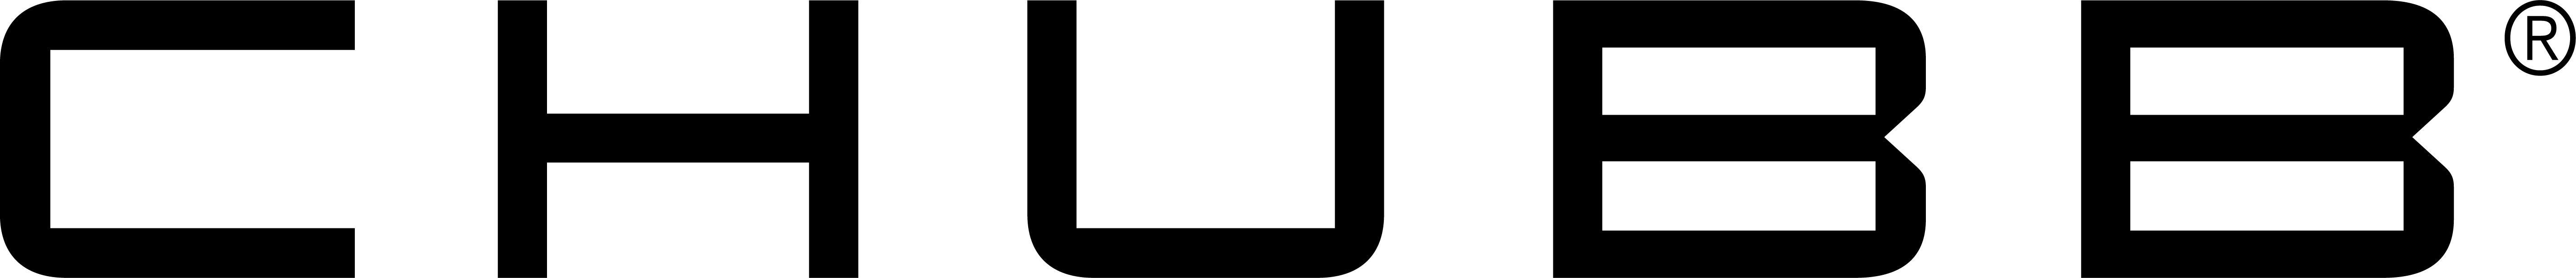 Logo Chubb